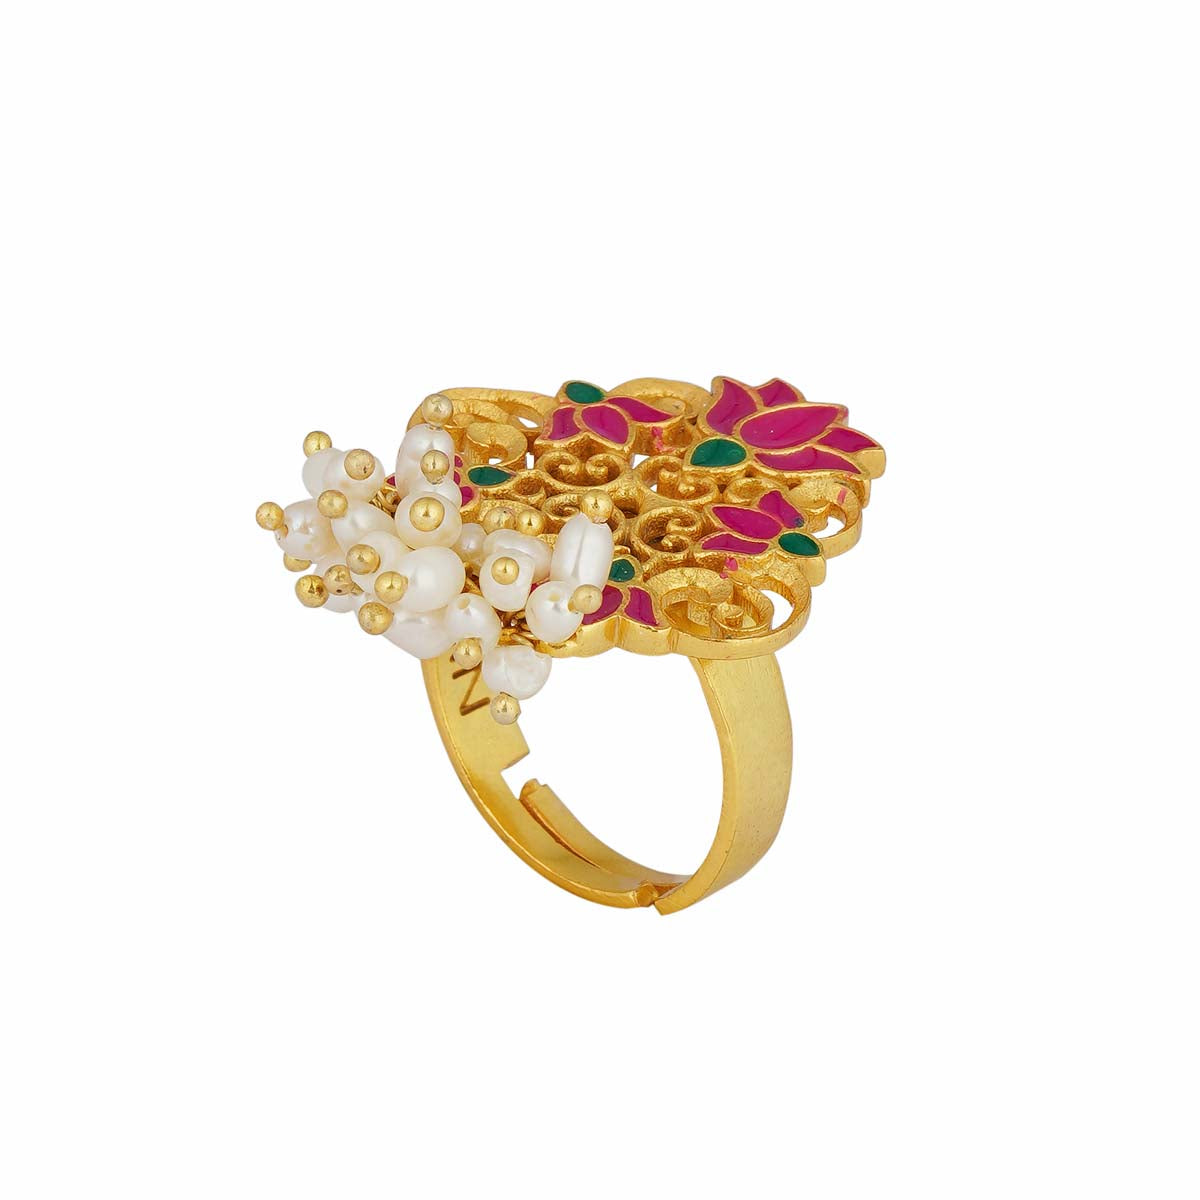 Beautiful Ring Design Gold Ring Gemstone Stock Photo 2317586163 |  Shutterstock